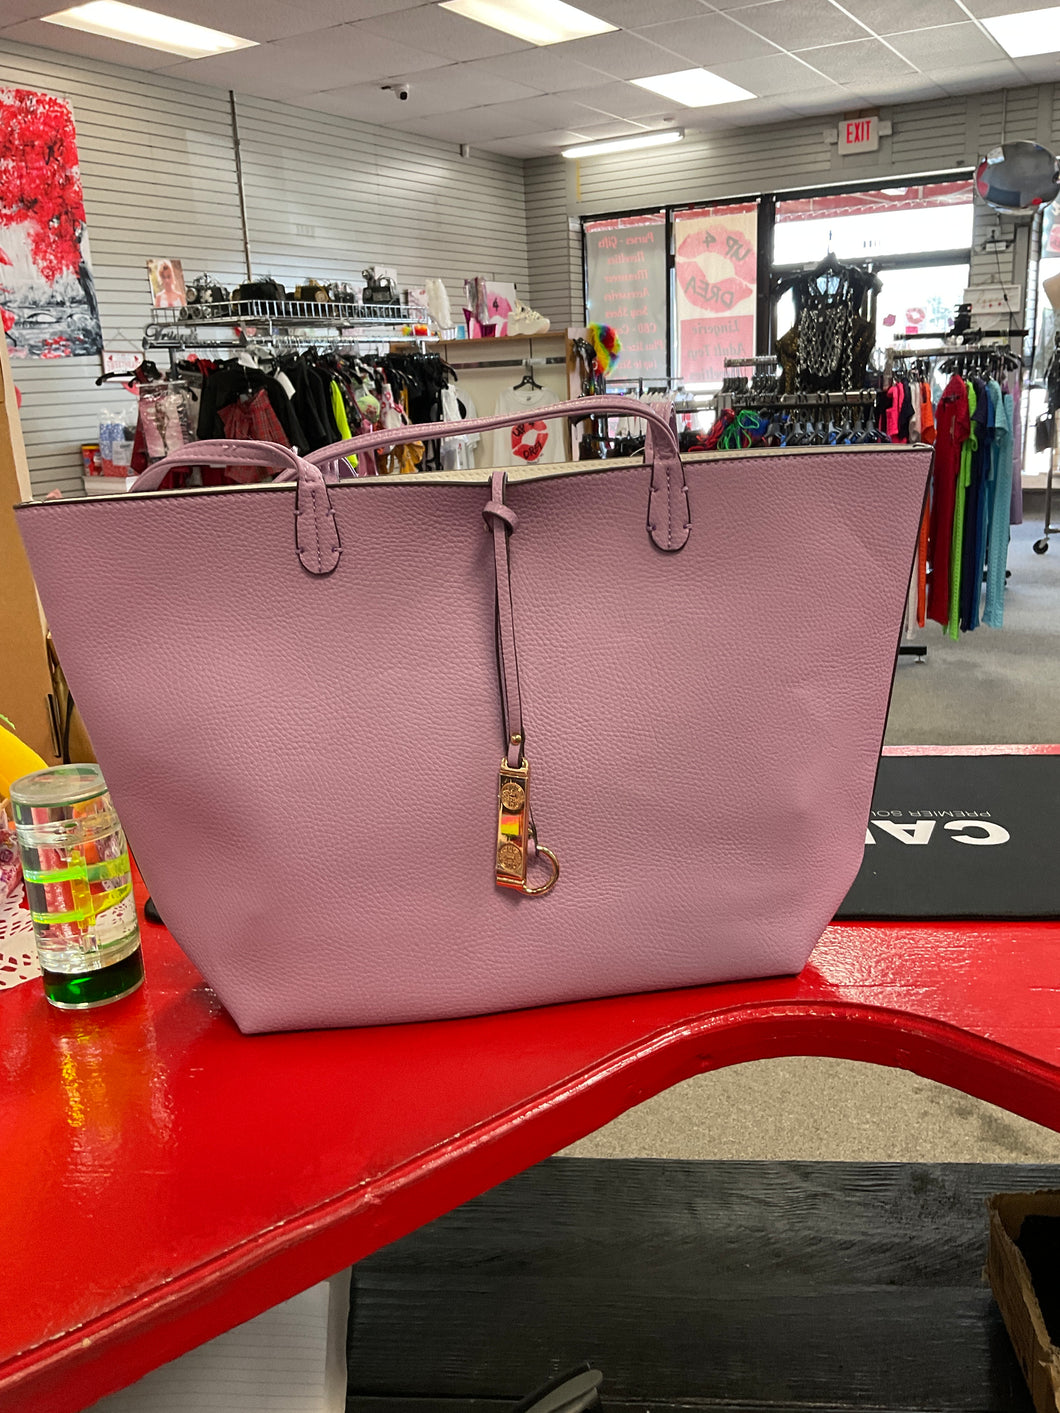 Lavender purse inside a purse